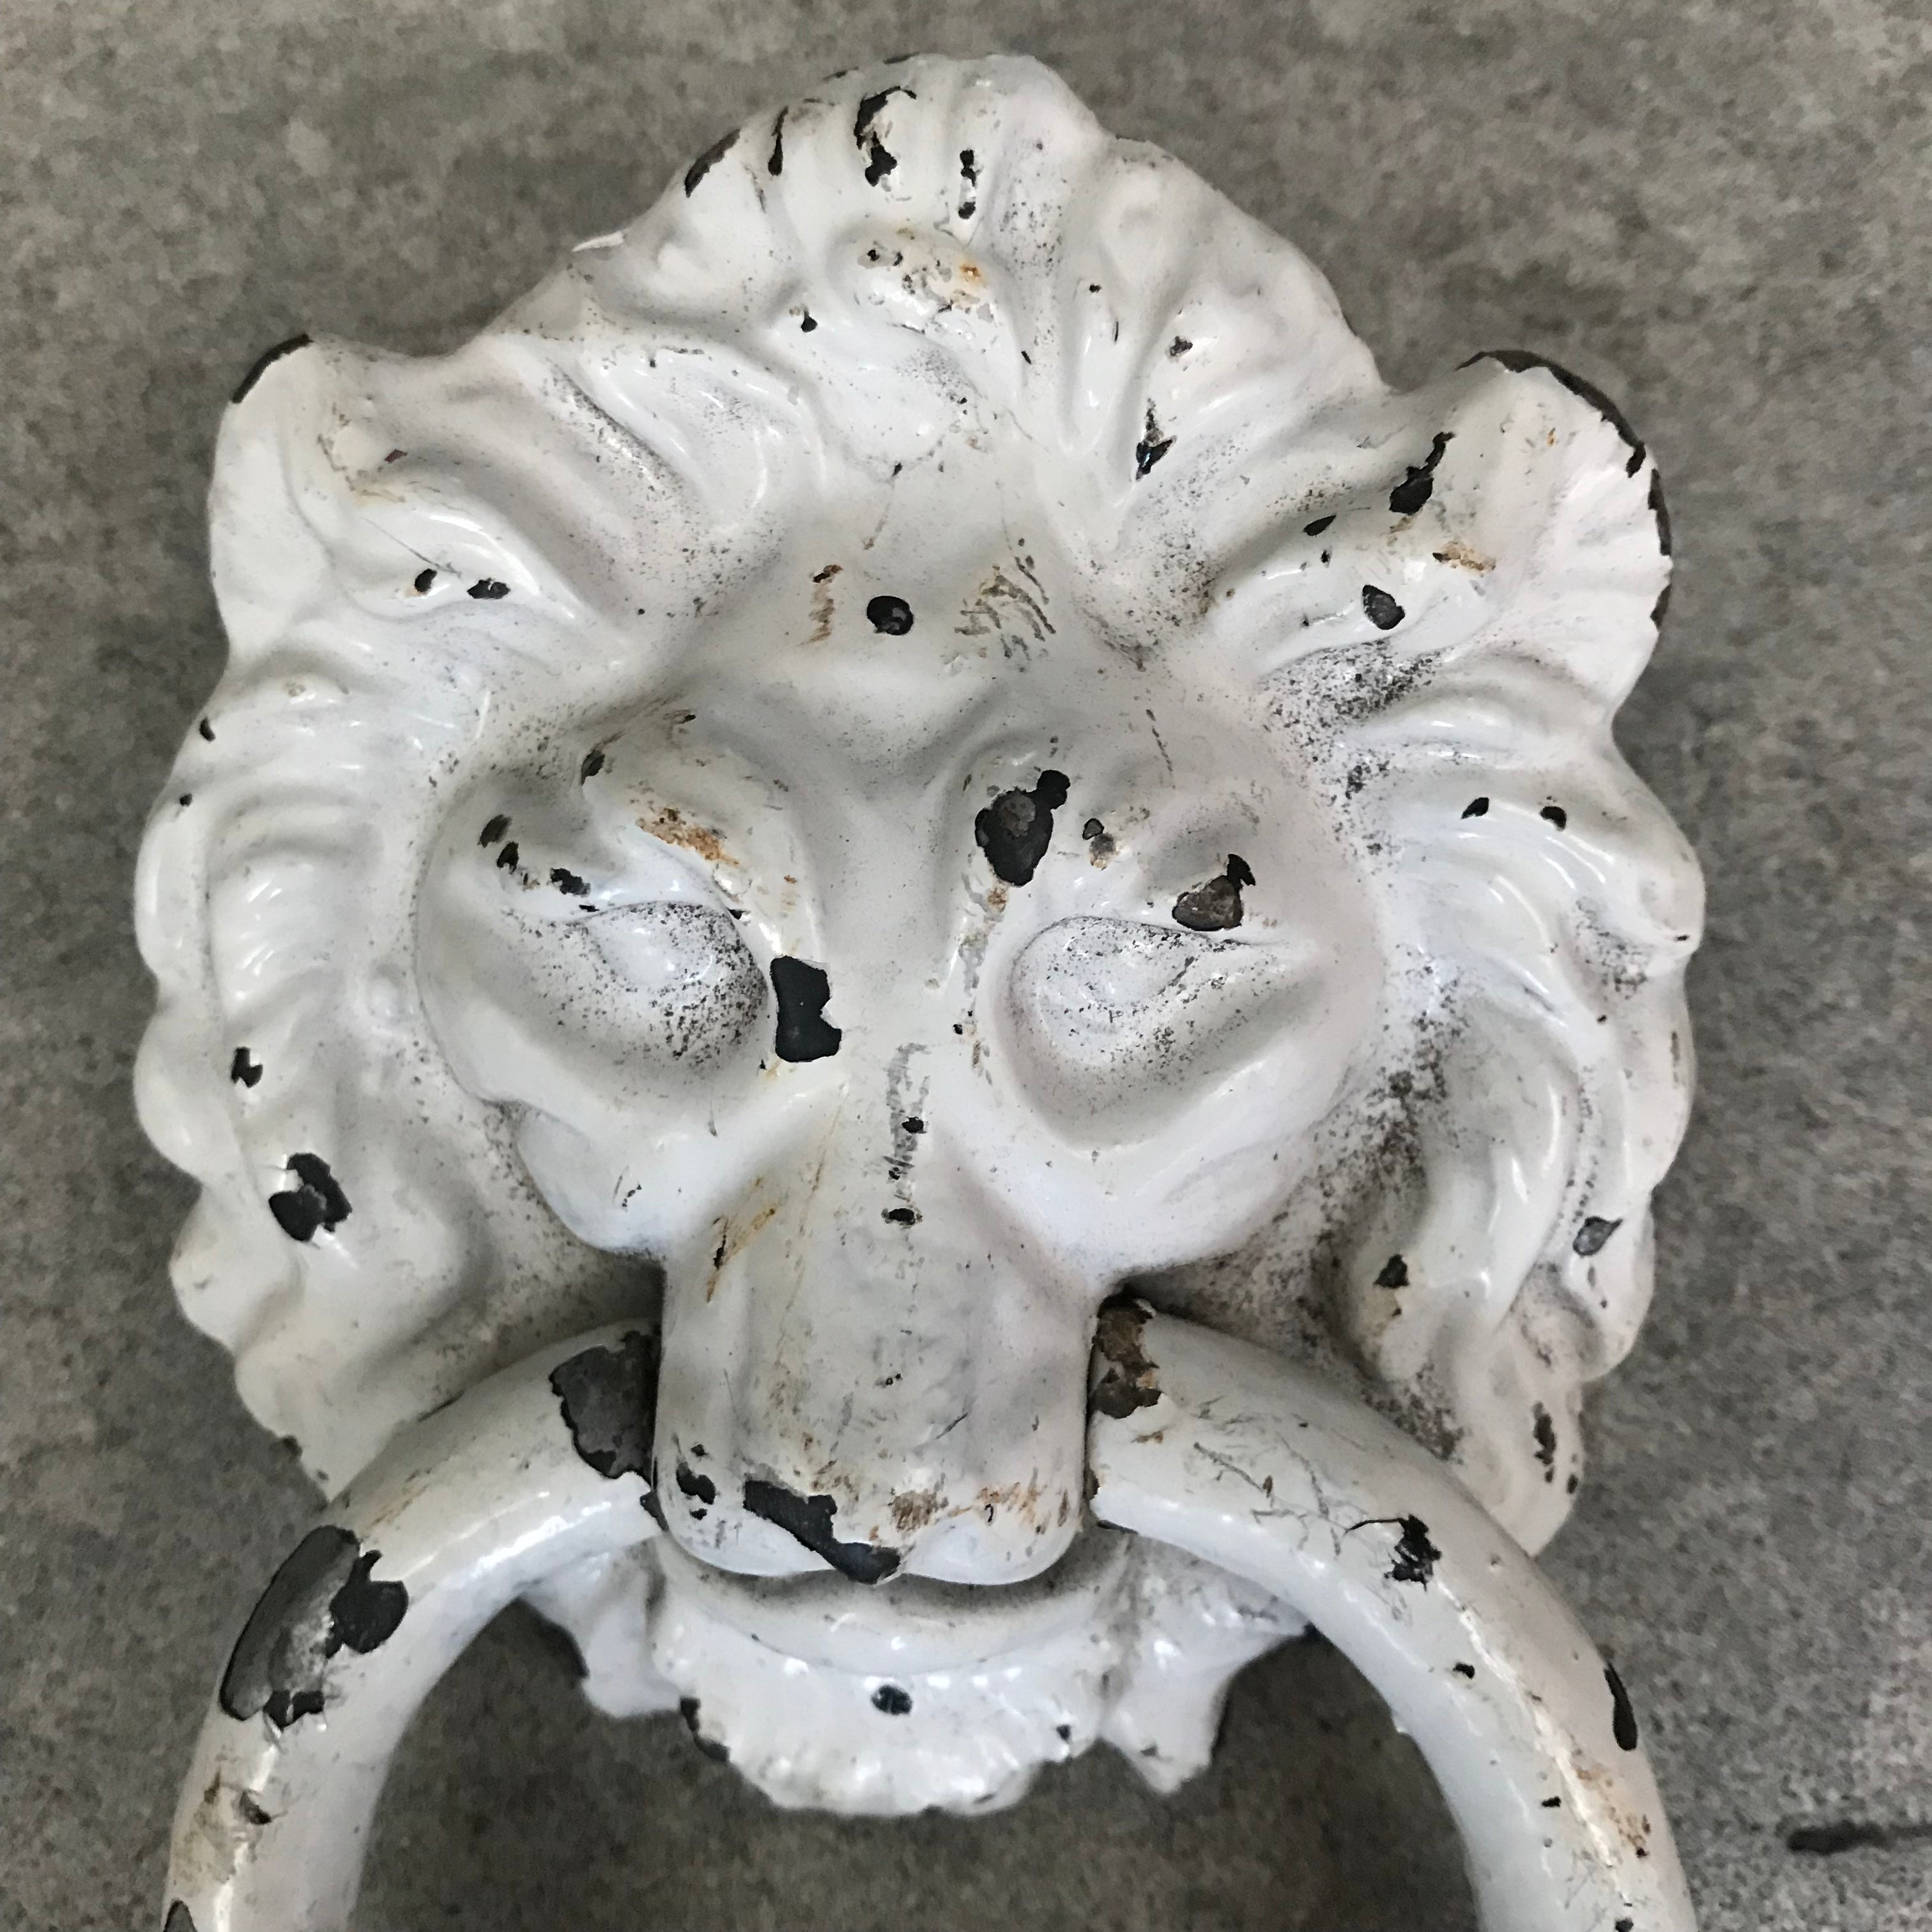 Antique Cast Iron Lion Head Door Knocker